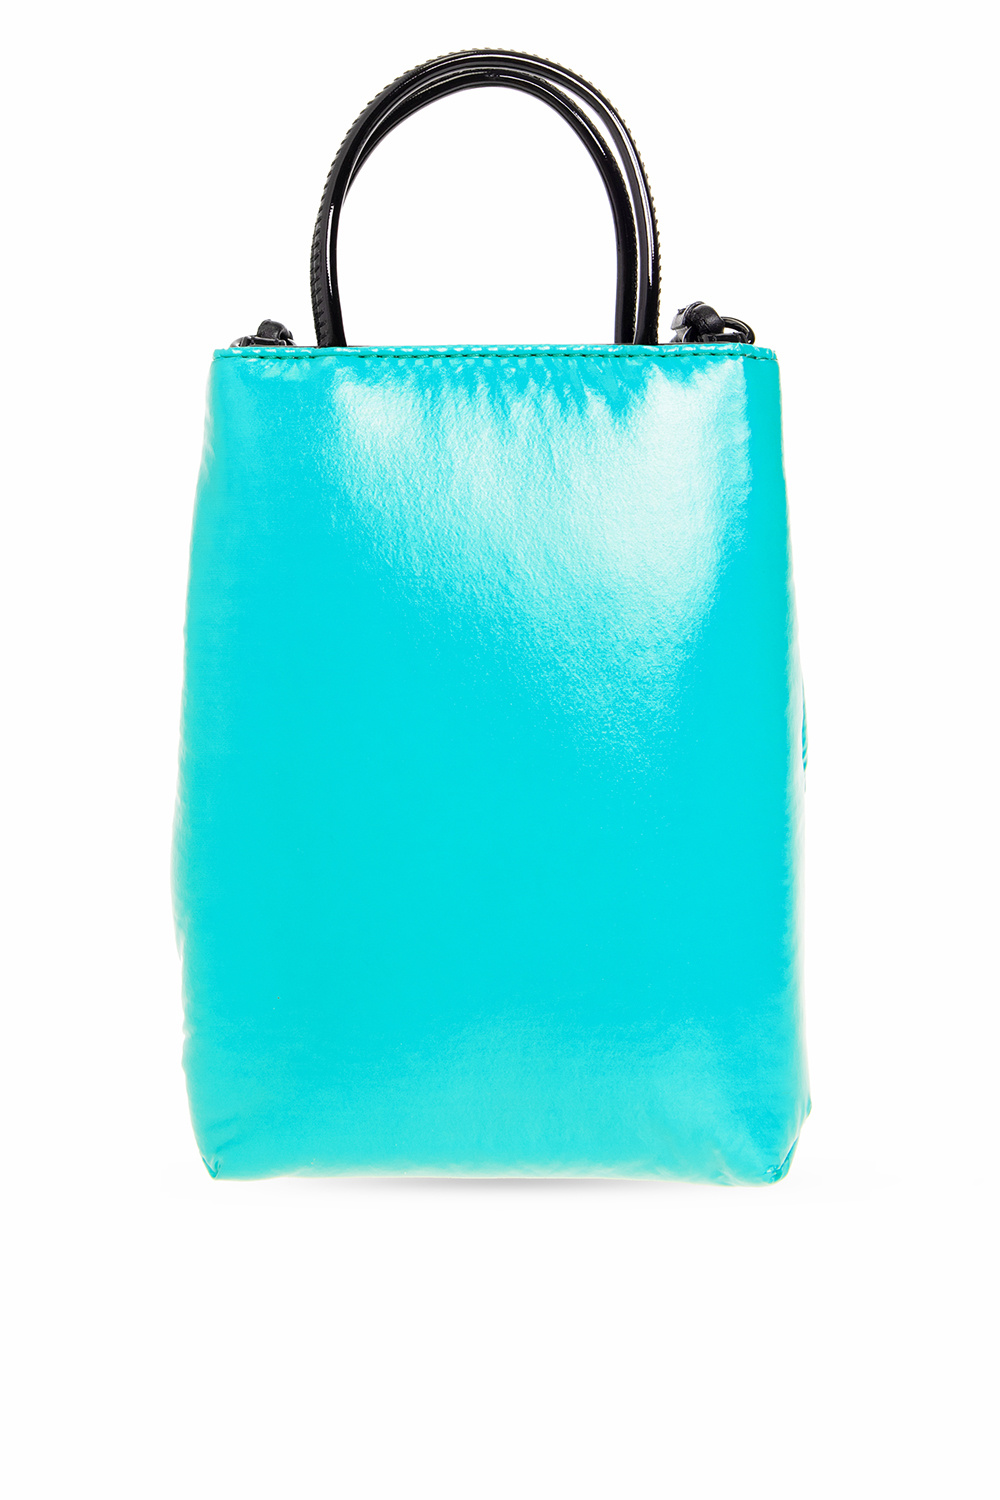 Furla ‘Opportunity Mini’ shoulder bag